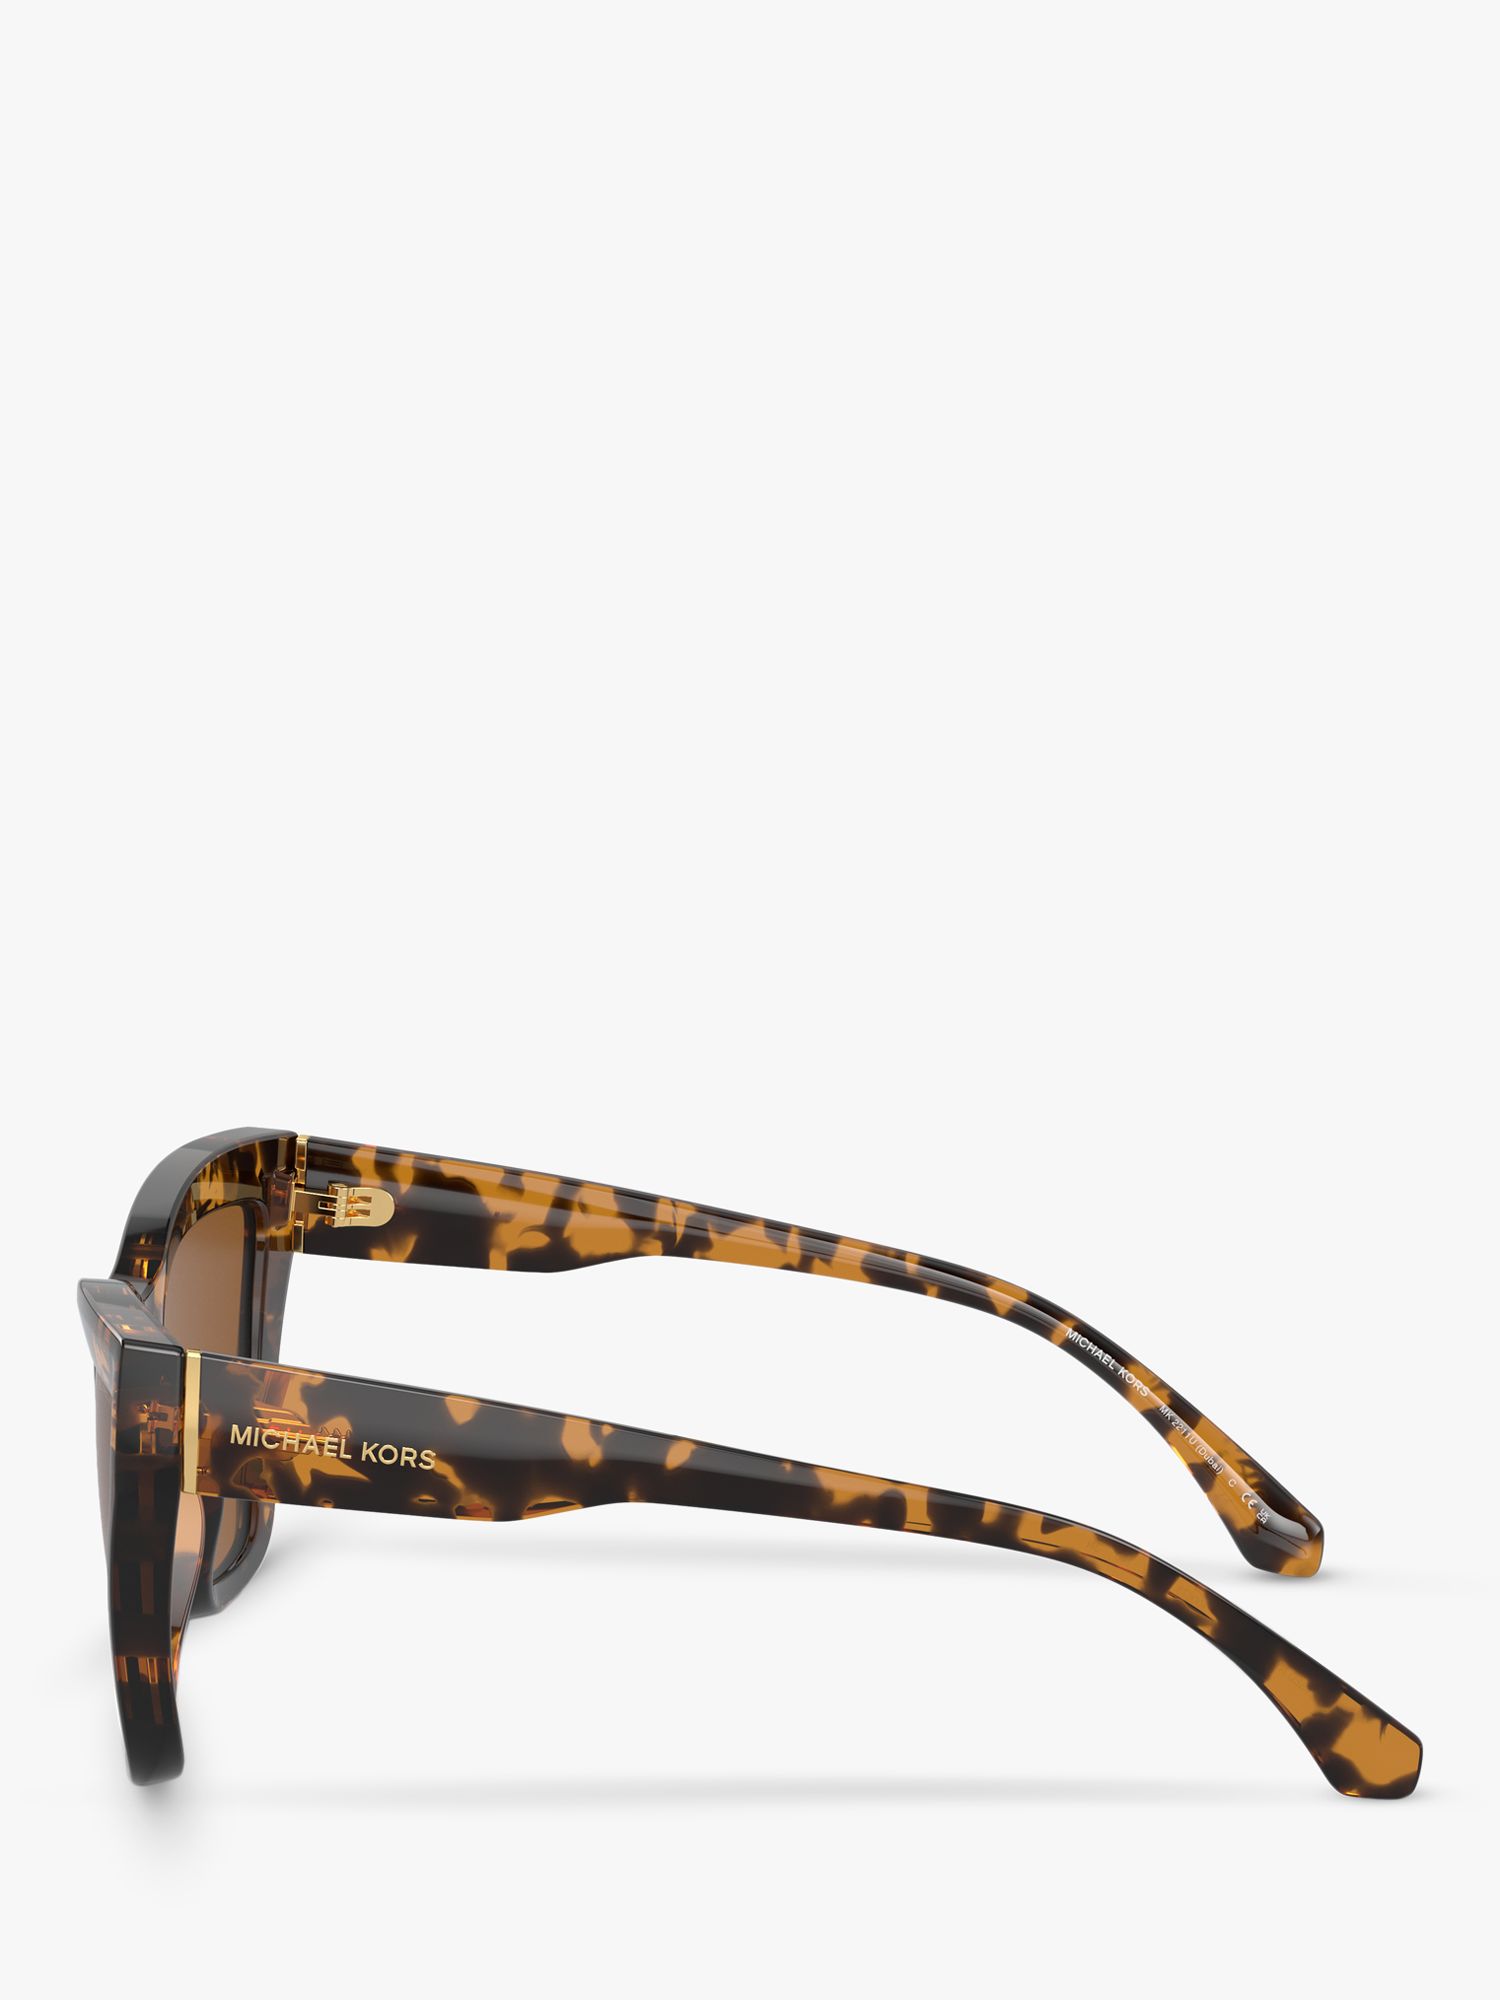 Michael Kors MK2211U Women's Dubai Cat's Eye Sunglasses, Dark Tortoise/Brown